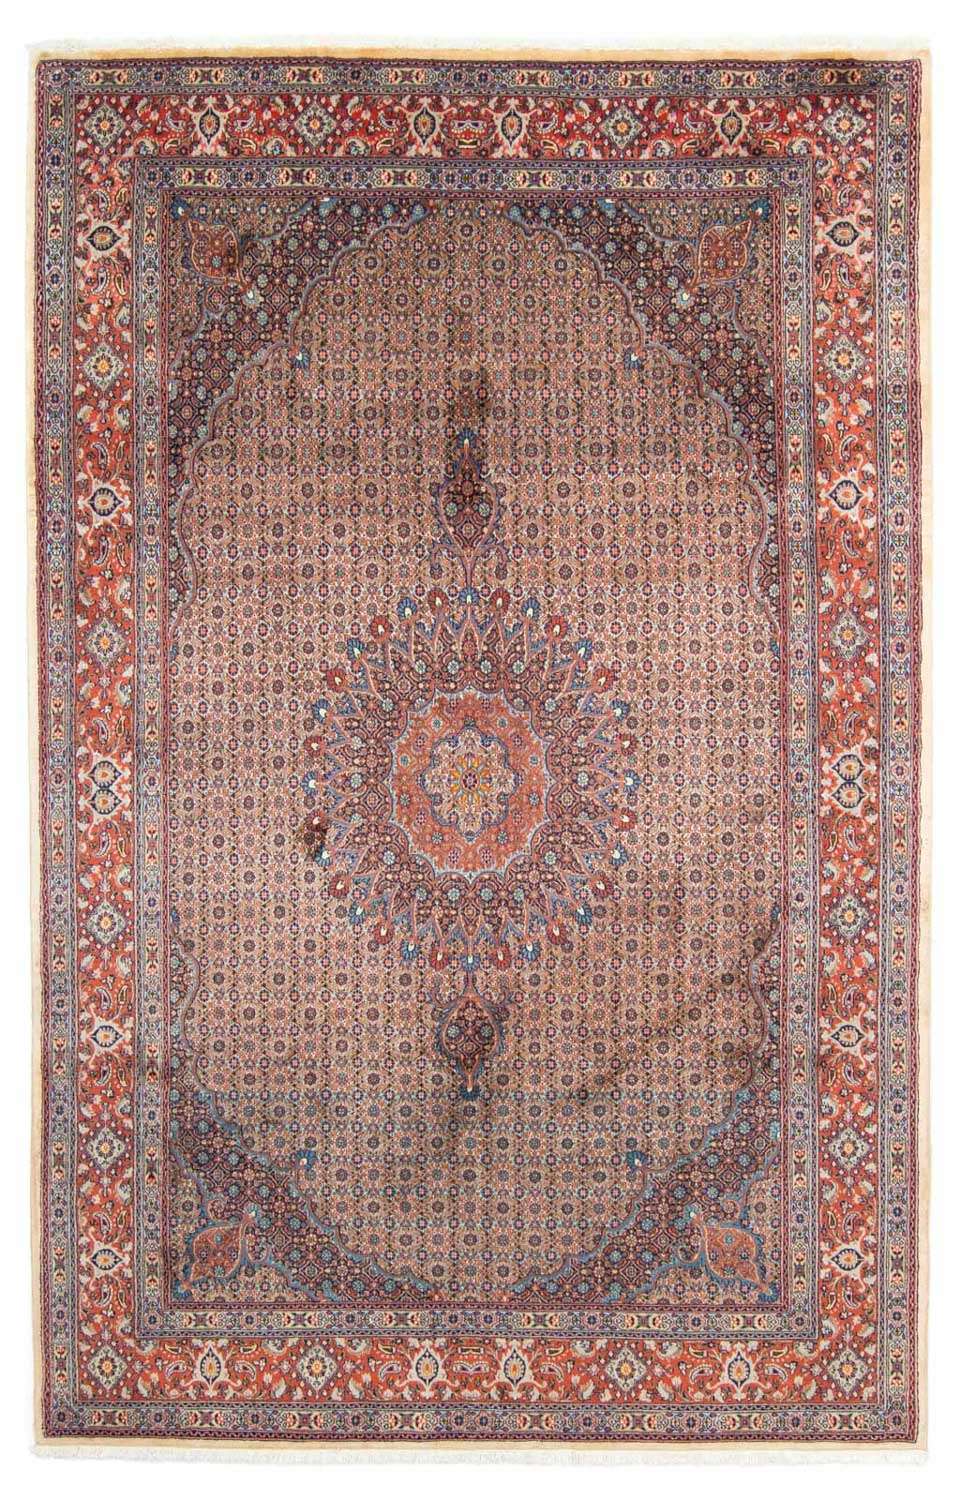 Alfombra persa - Clásica - 293 x 198 cm - rojo claro